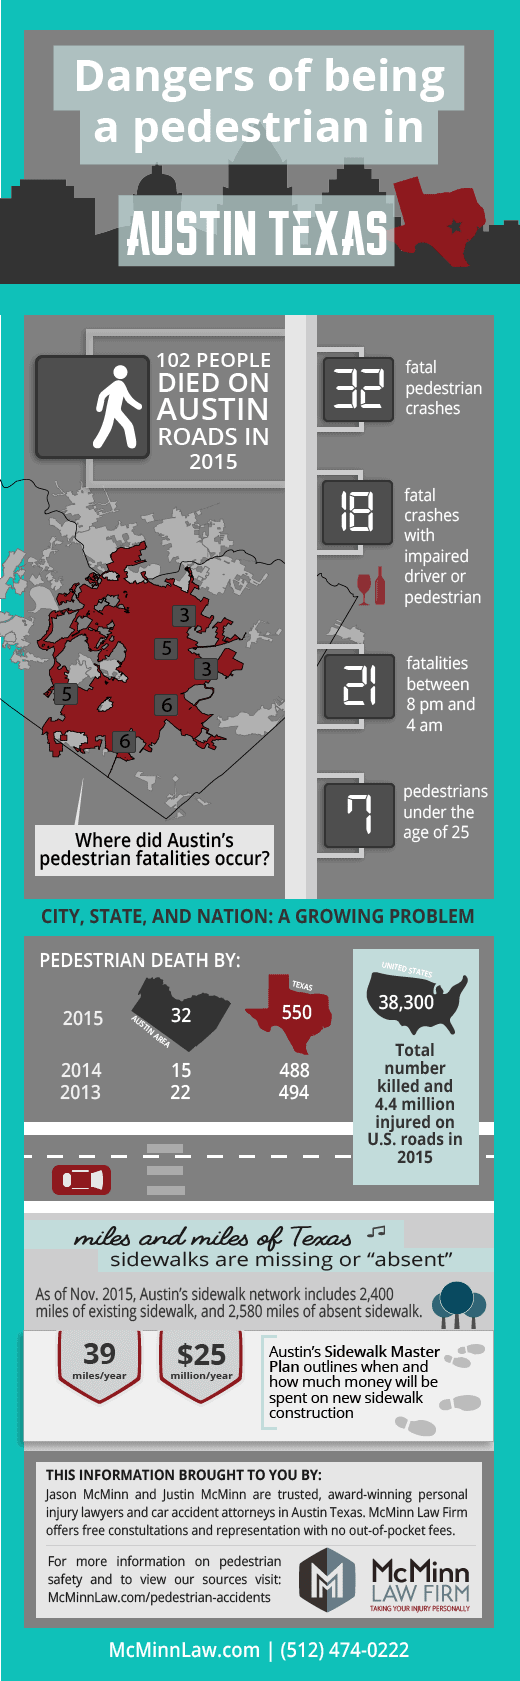 Dangers of Being a Pedestrian in Austin Texas